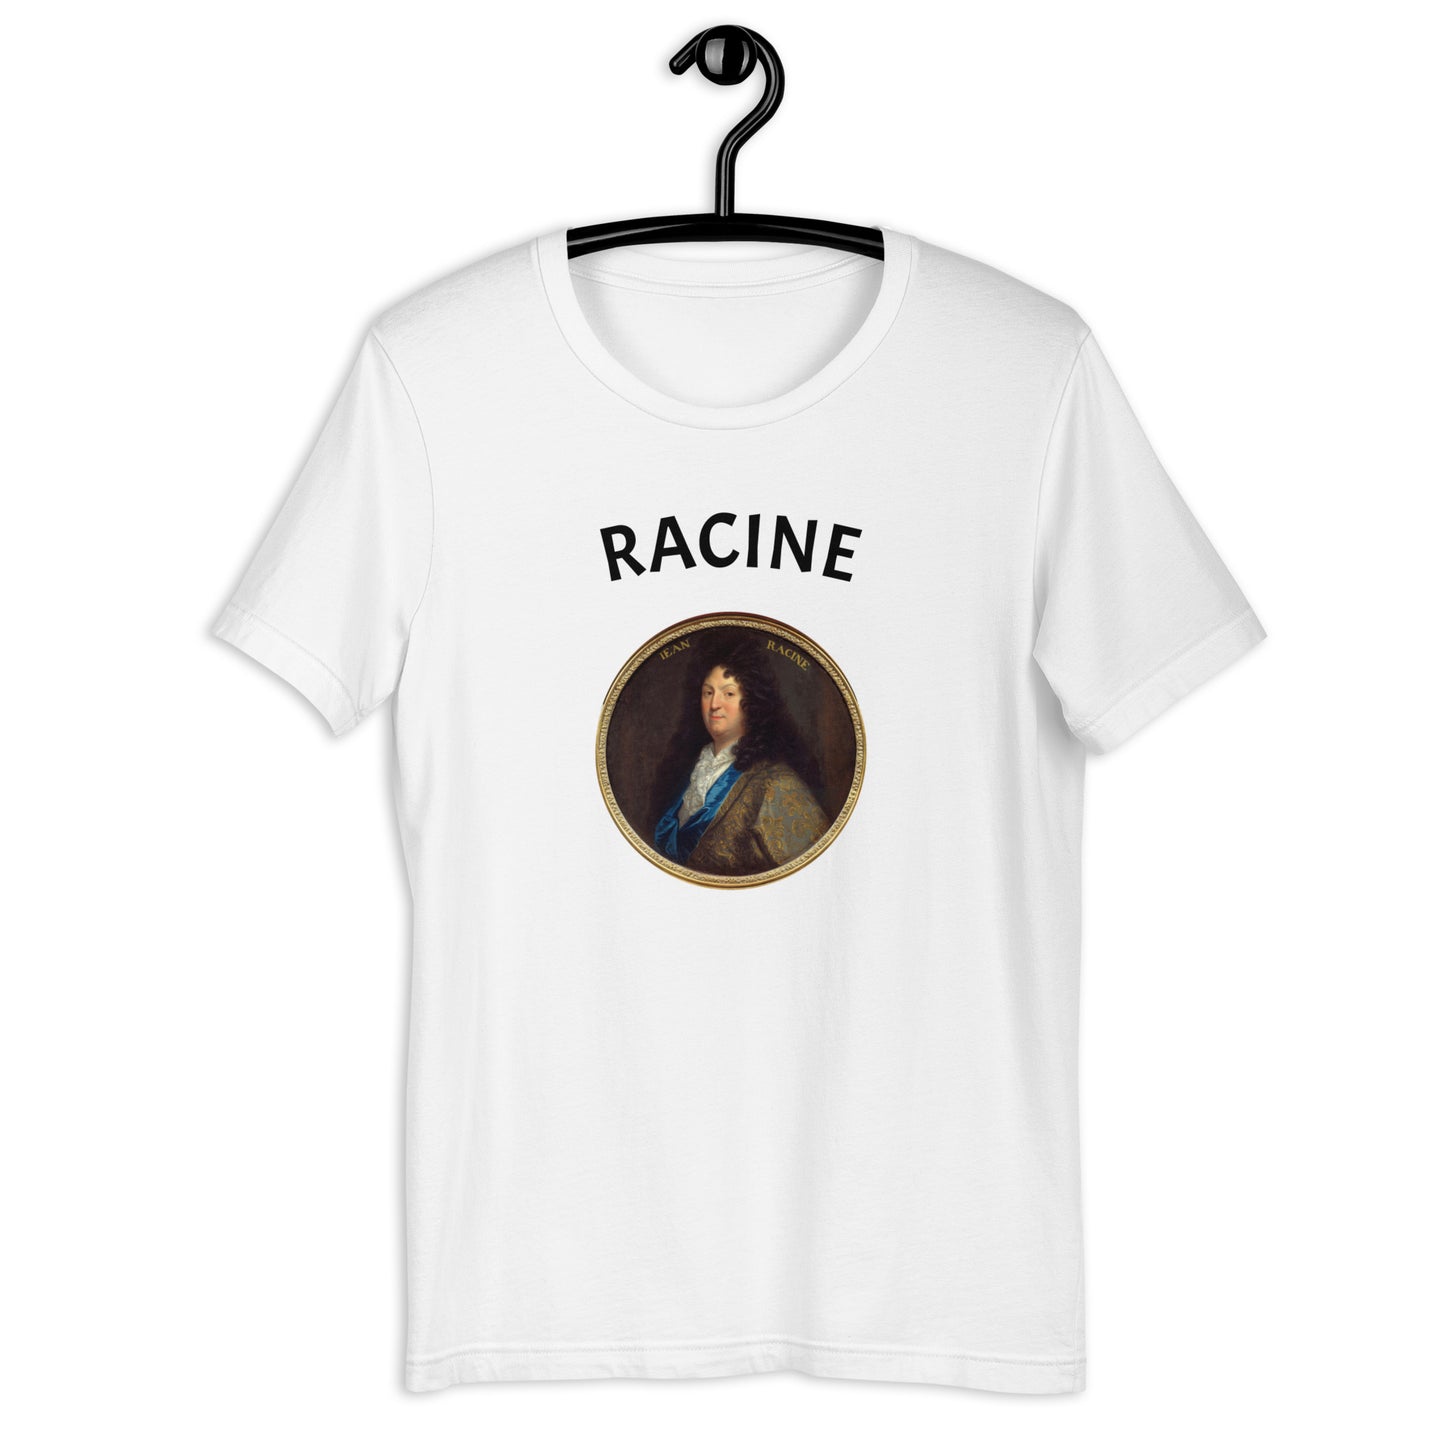 Racine unisex t-shirt